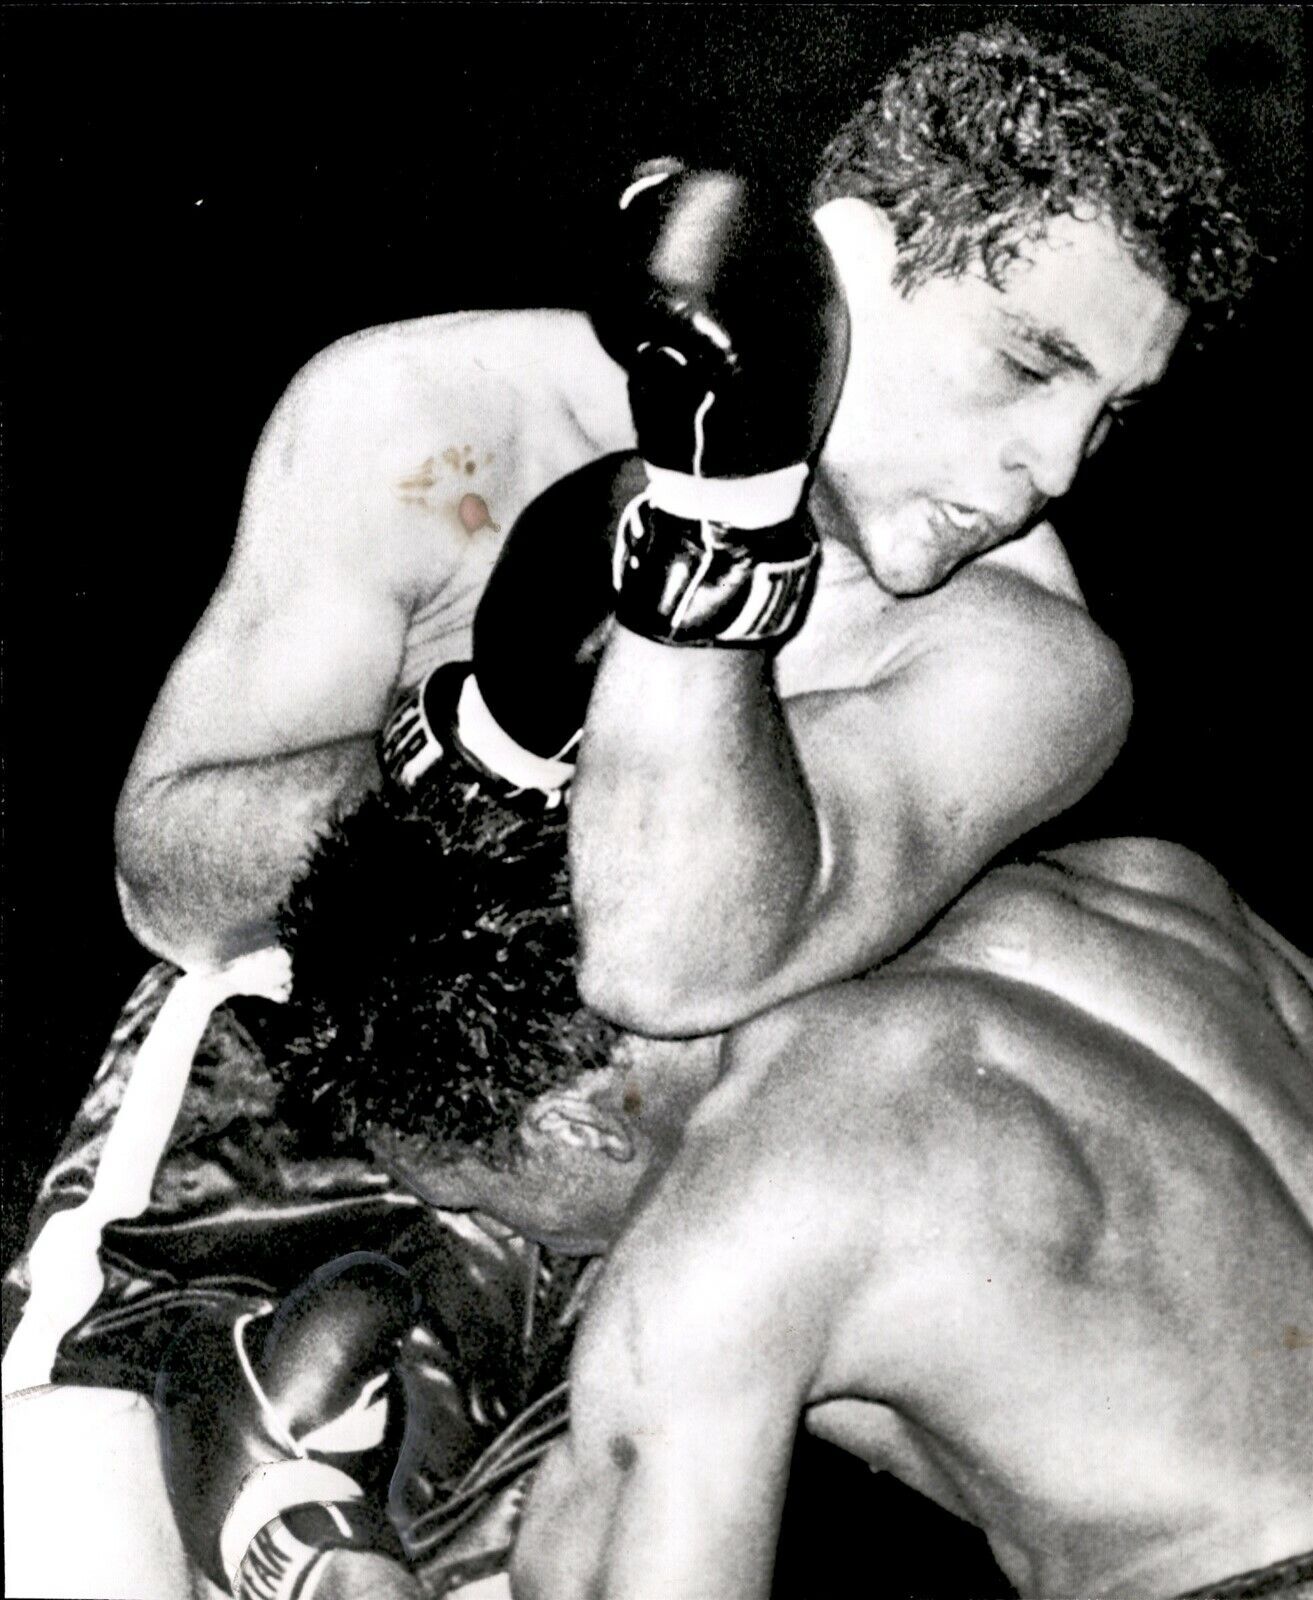 LG907 1960 AP Wire Photo WILLIE PASTRANO vs ALONZO JOHNSON Kentucky Derby Boxing